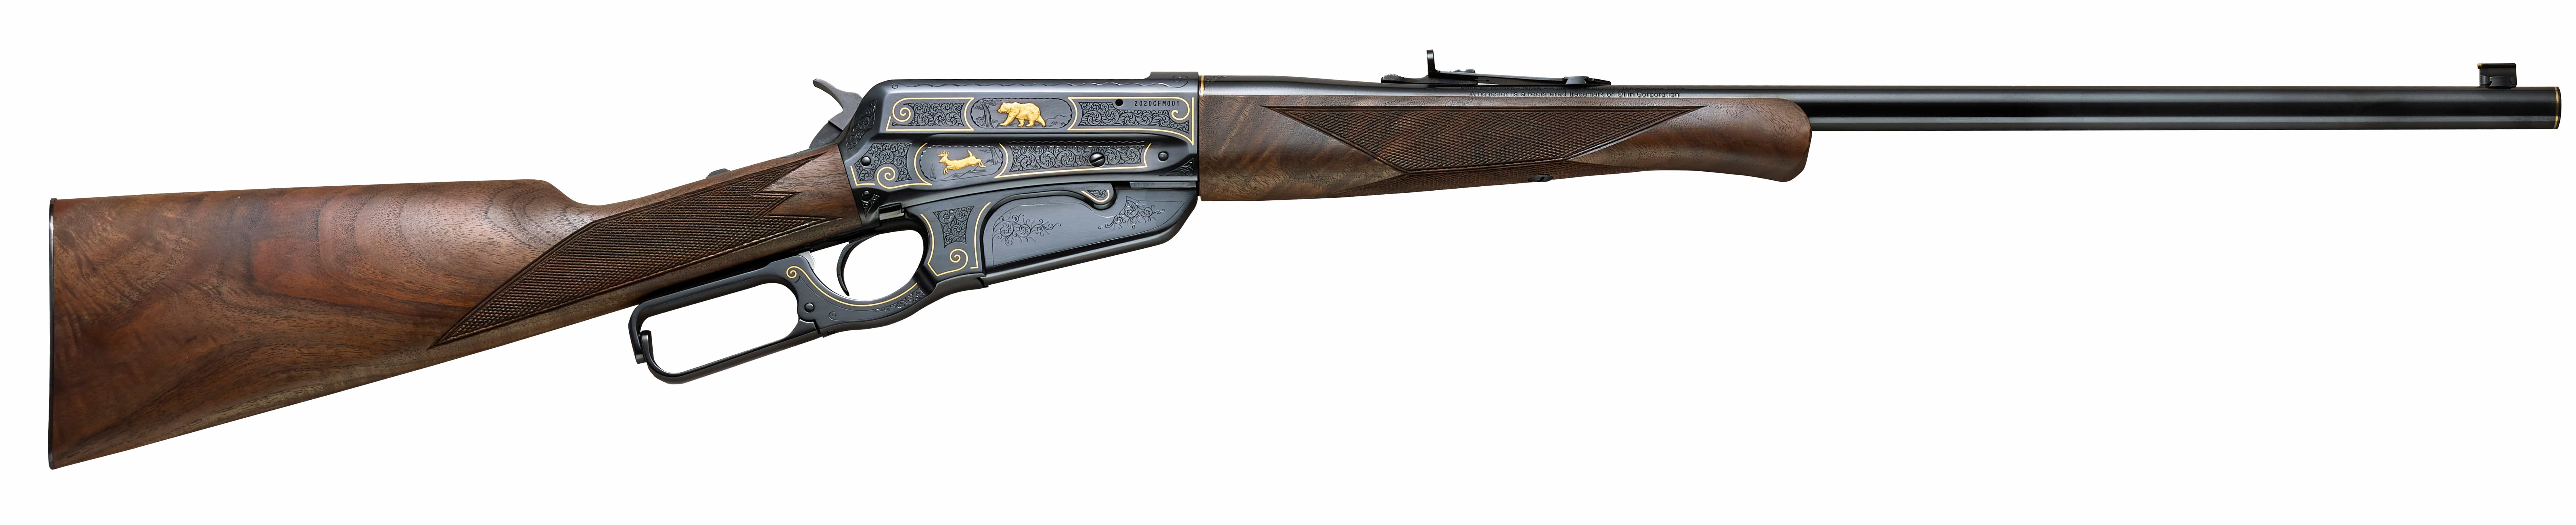 The Winchester Gun Museum c1965 